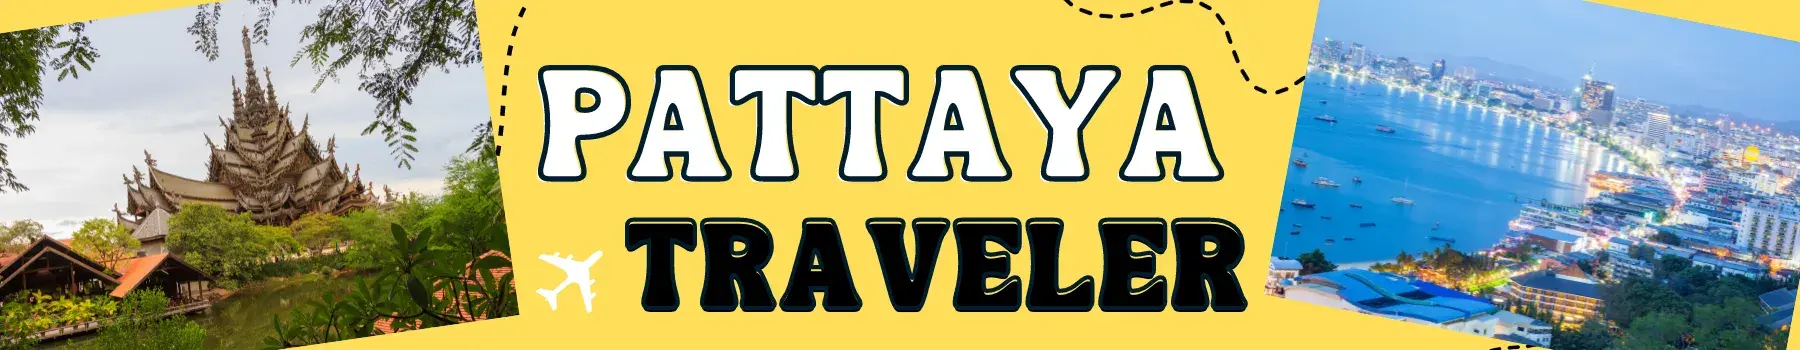 Pattaya Traveler